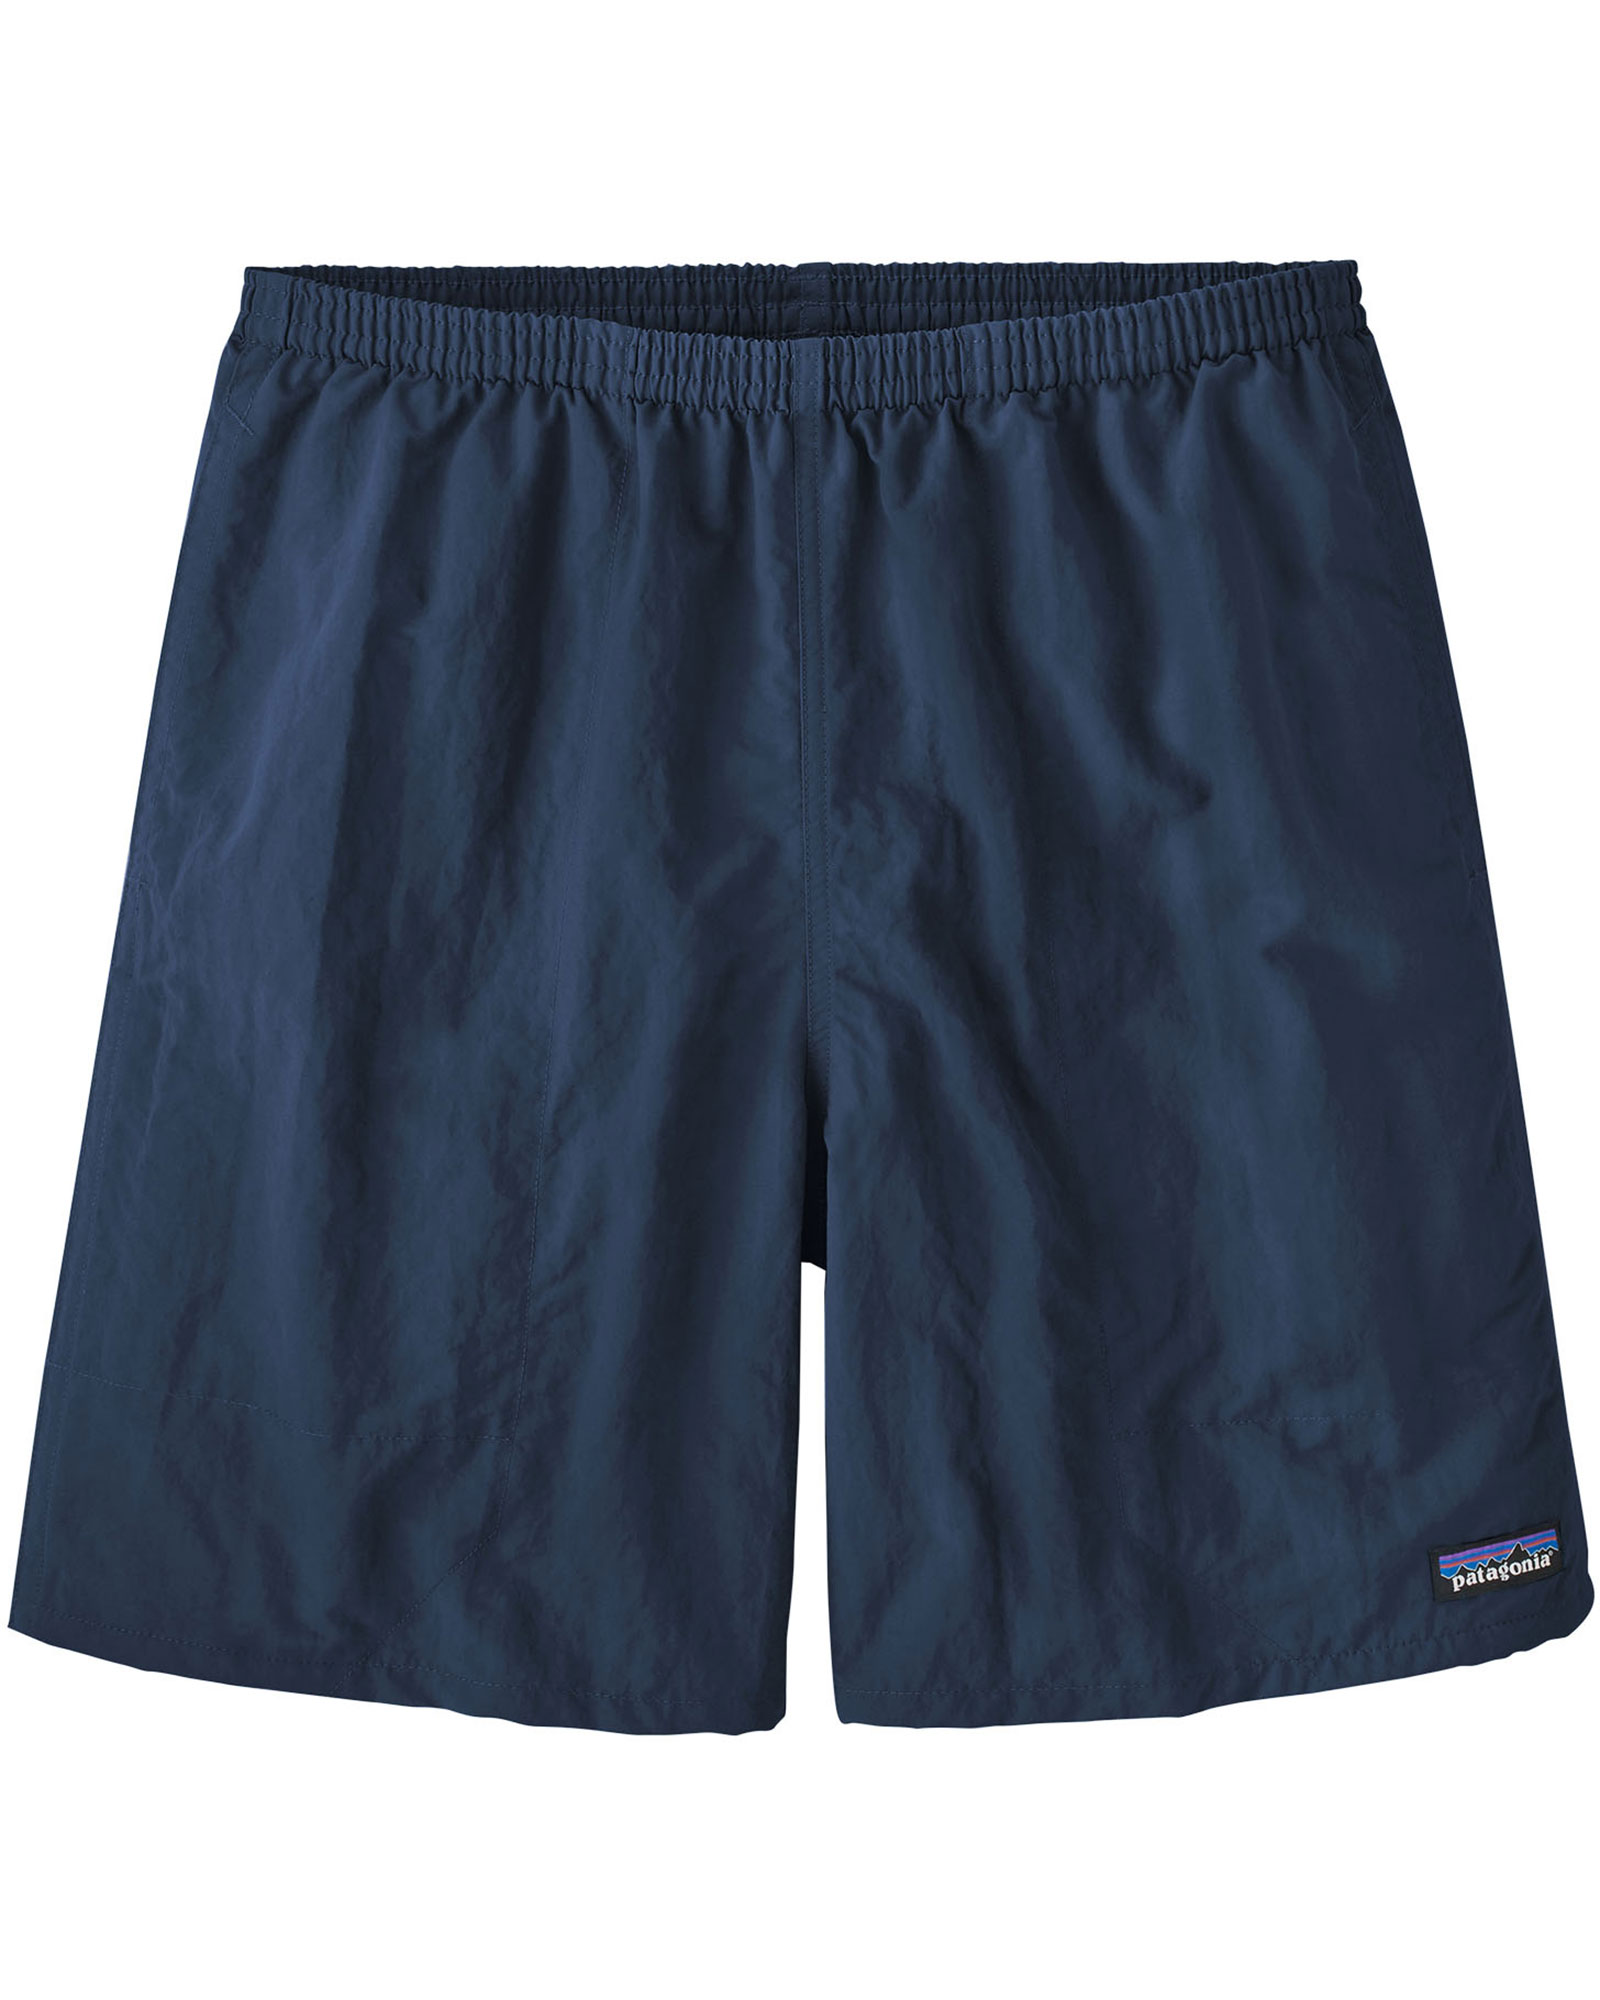 Patagonia Baggies Longs Men’s 7" Shorts - Tidepool Blue XL